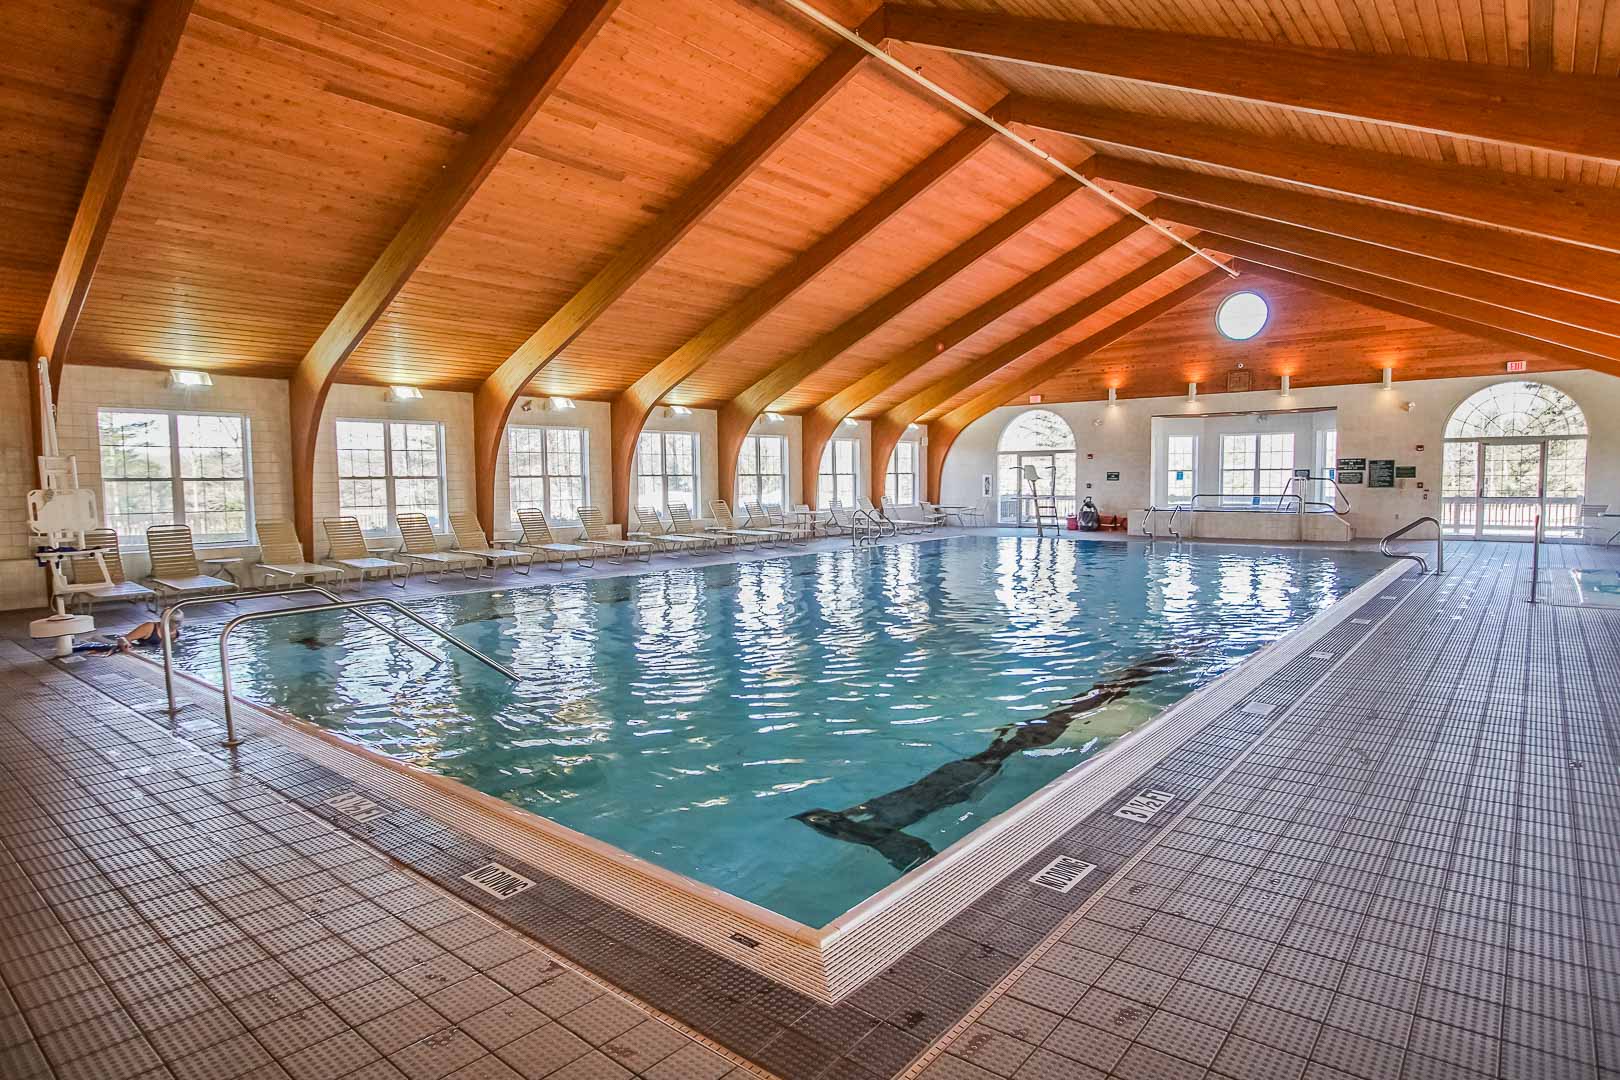 A refreshing indoor pool at VRI's Tanglwood Resort in Pennsylvania.